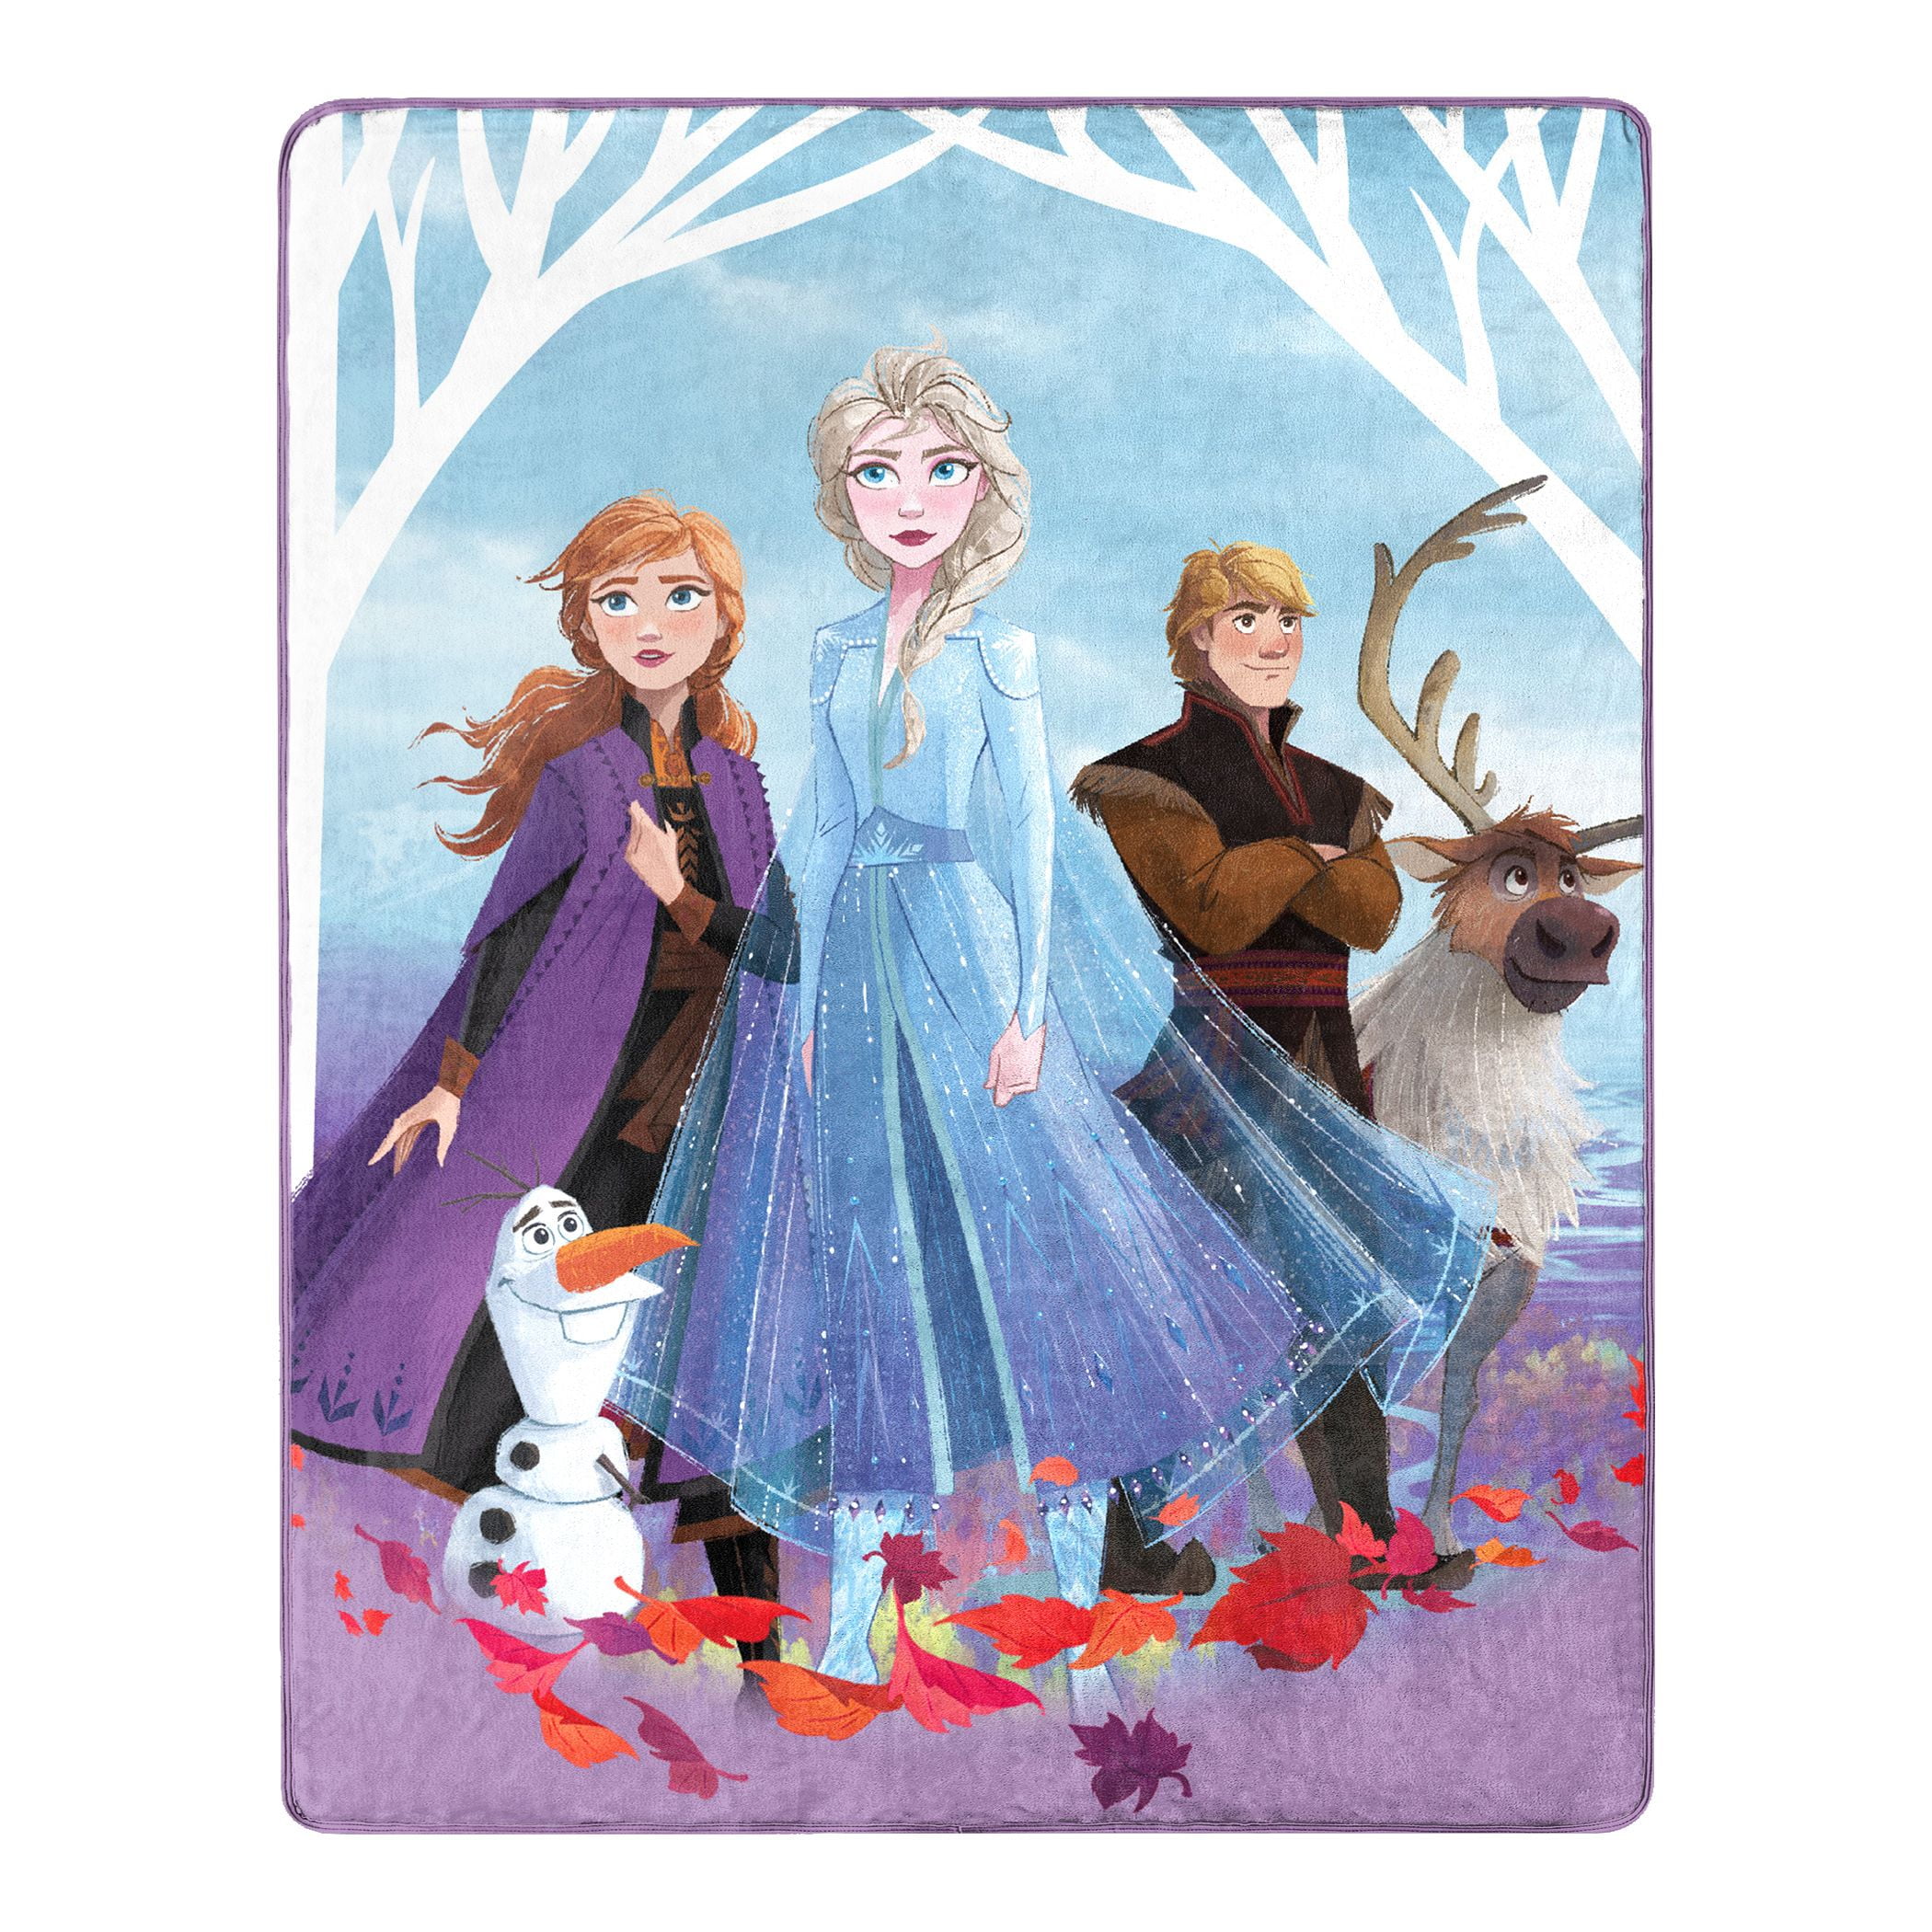 II Olaf Super Plush and 50"x 40" Throw Blanket gift  Set new Disney Frozen 2 